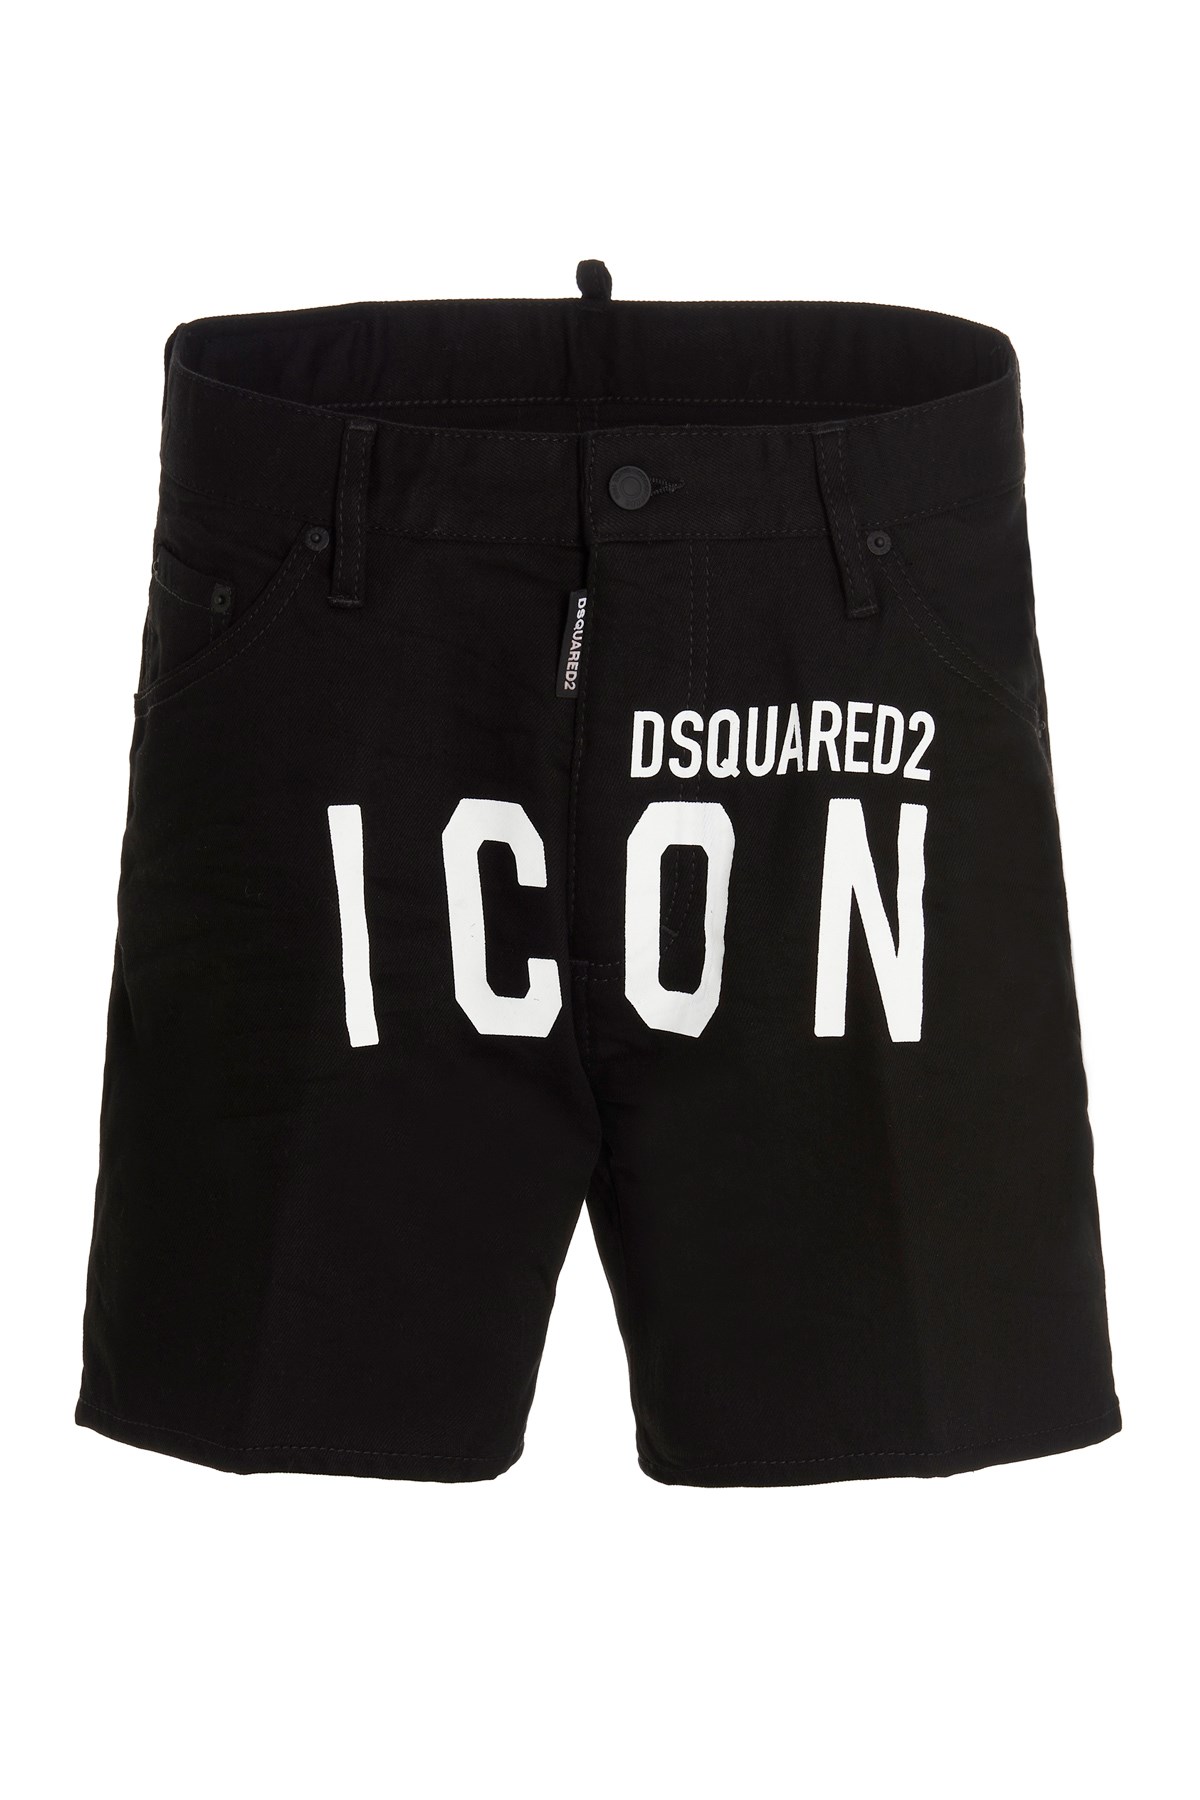 DSQUARED2 'Dan Commando Short’ Bermuda Shorts